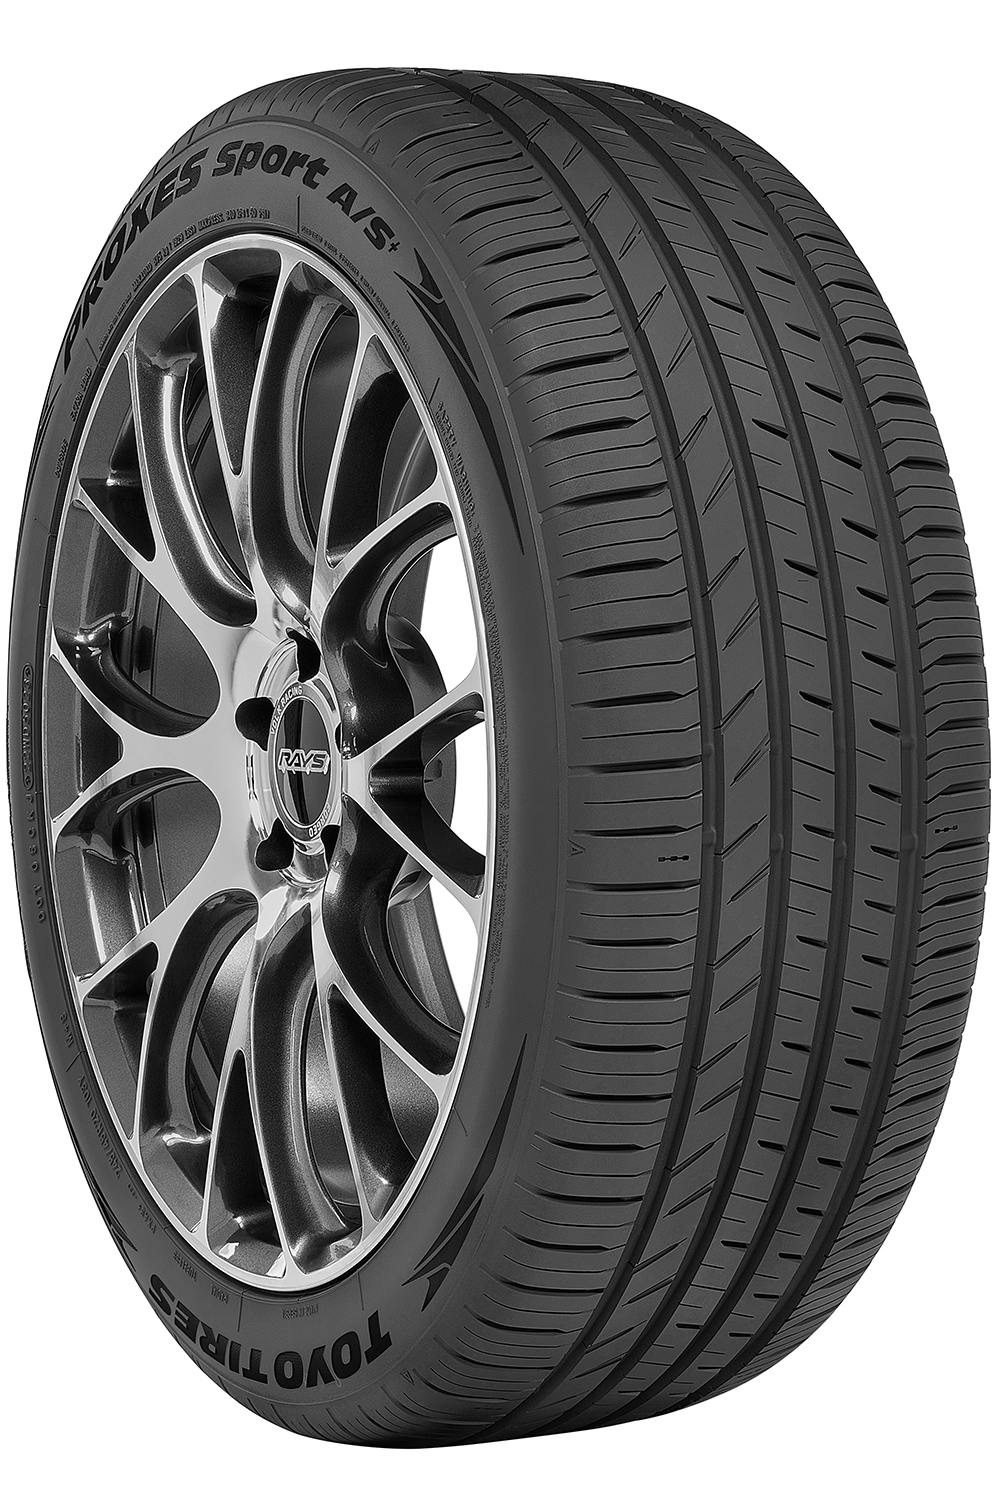 Toyo Announces Proxes Sport A/S+ Tire | Modern Tire Dealer